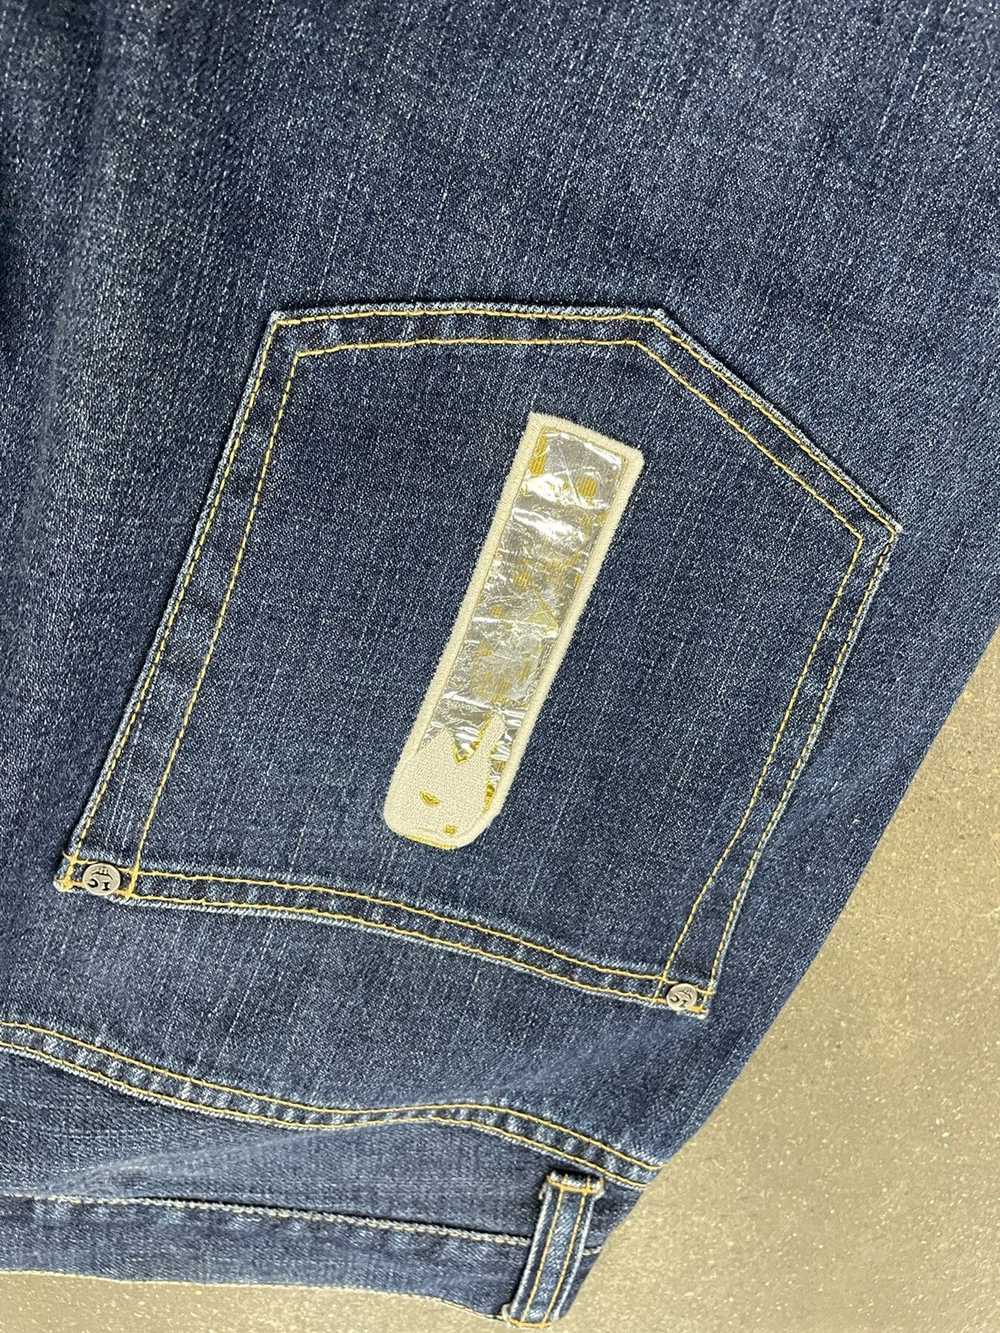 Japanese Brand Icecream Denim Jeans - image 3